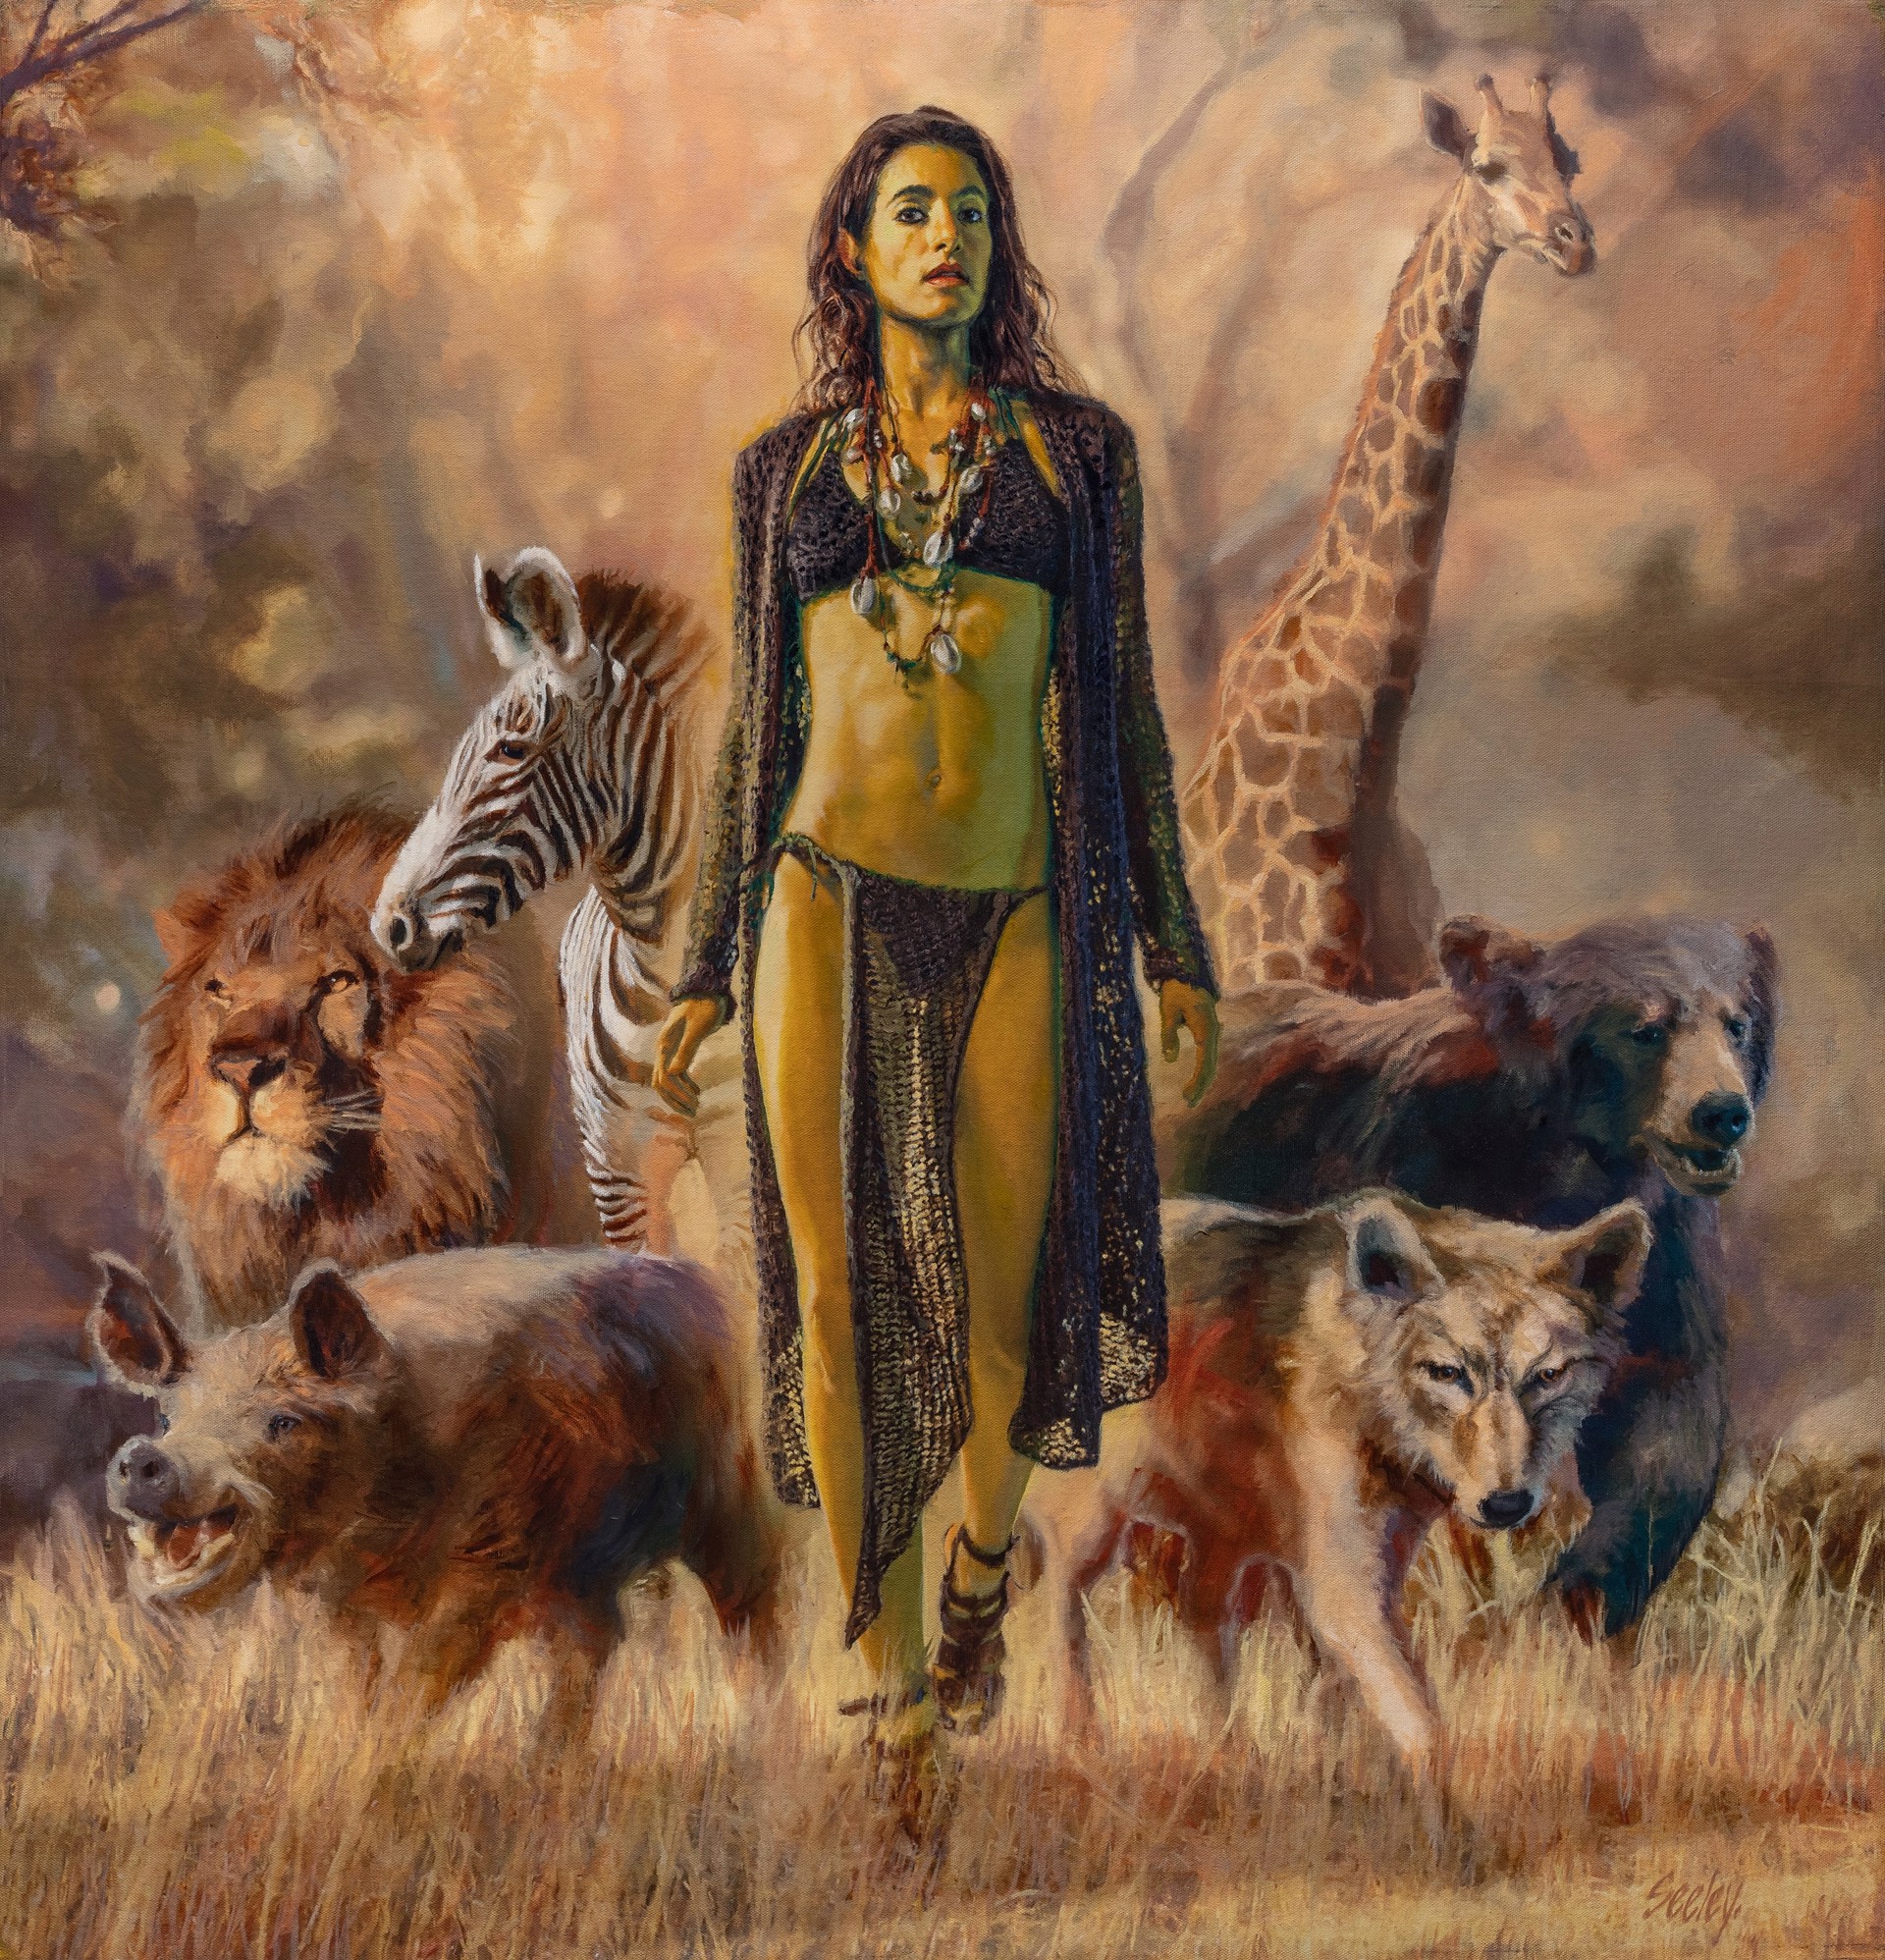 The Goddess Animalia by Dave Seeley